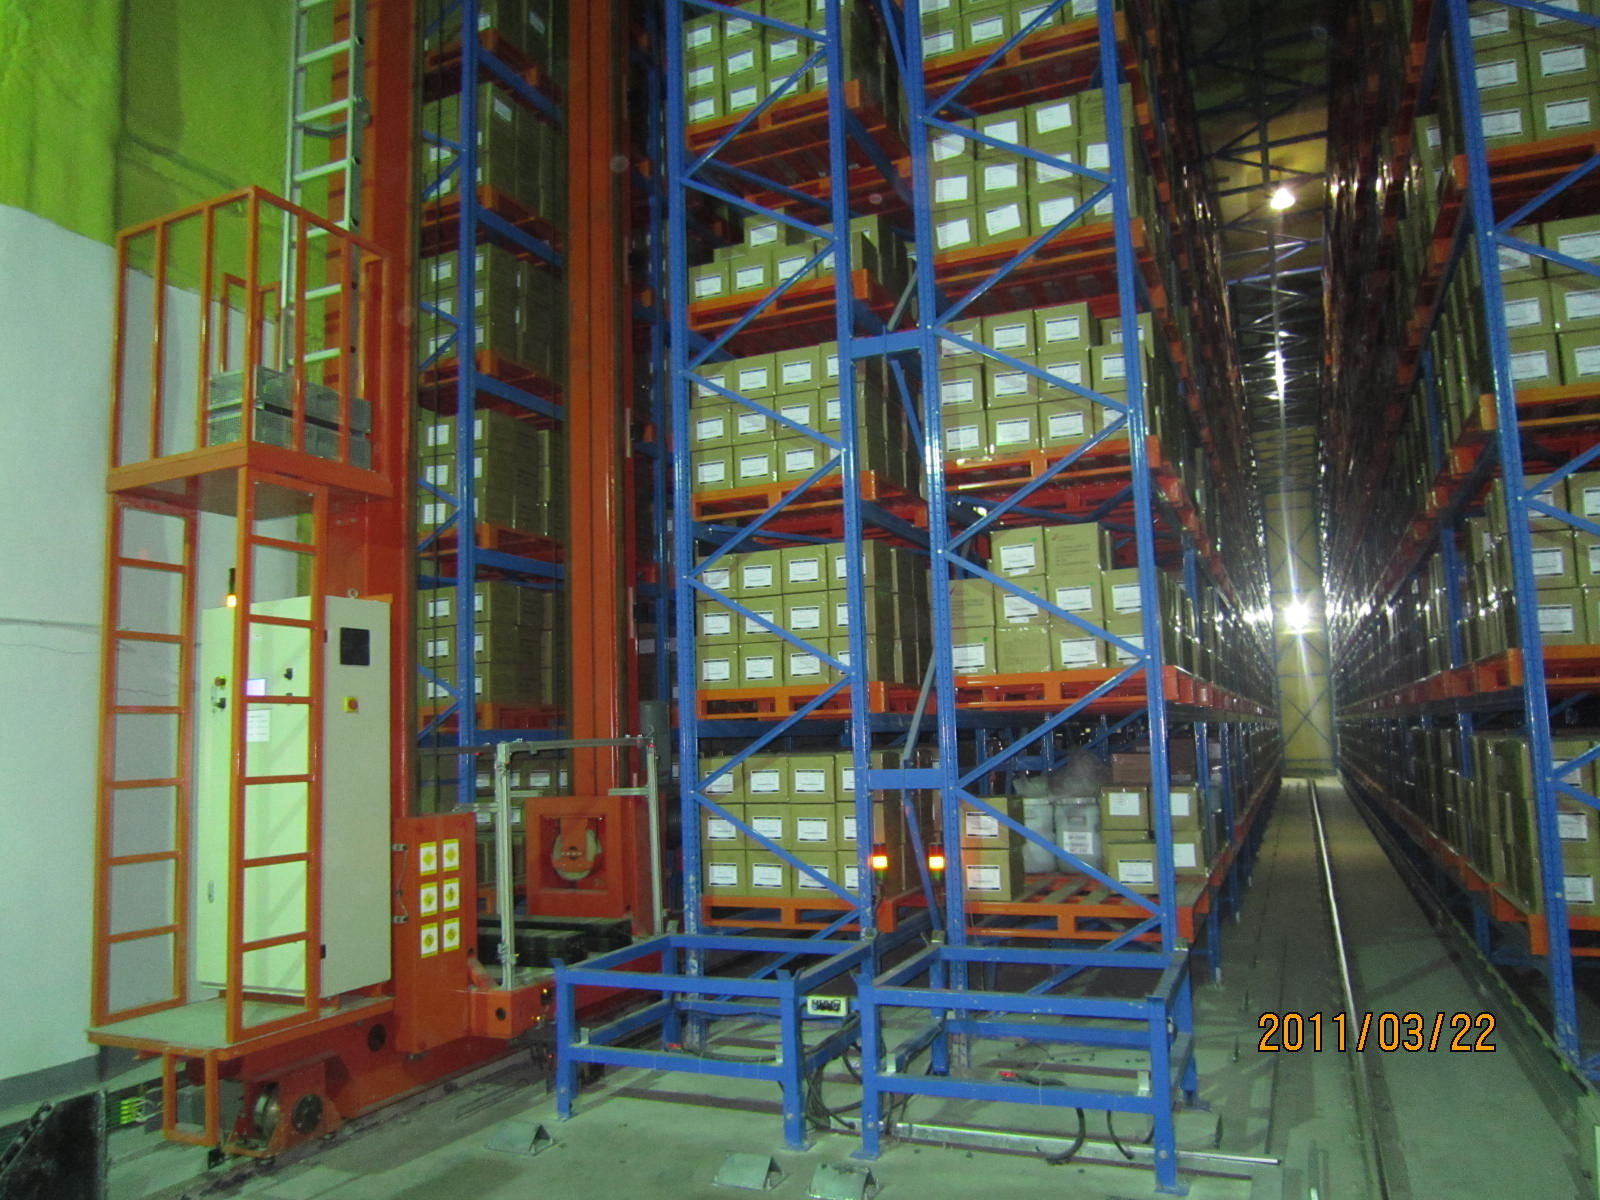 Customized Industrial Steel Storage Racks , Heavy Duty Shop Shelving 3000 Kg Max